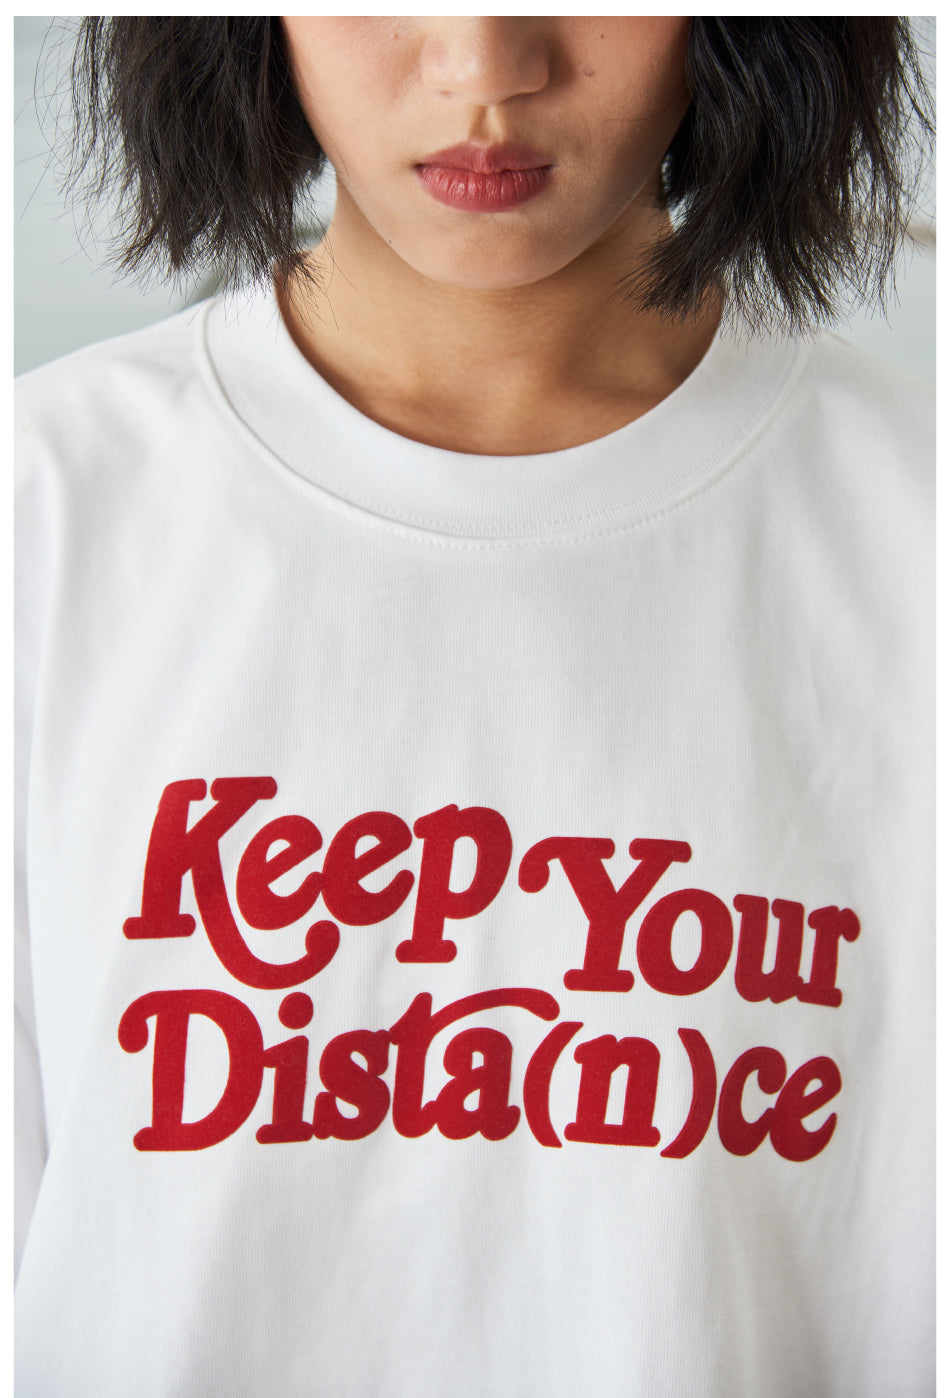 "Keep your distance" Print Tee